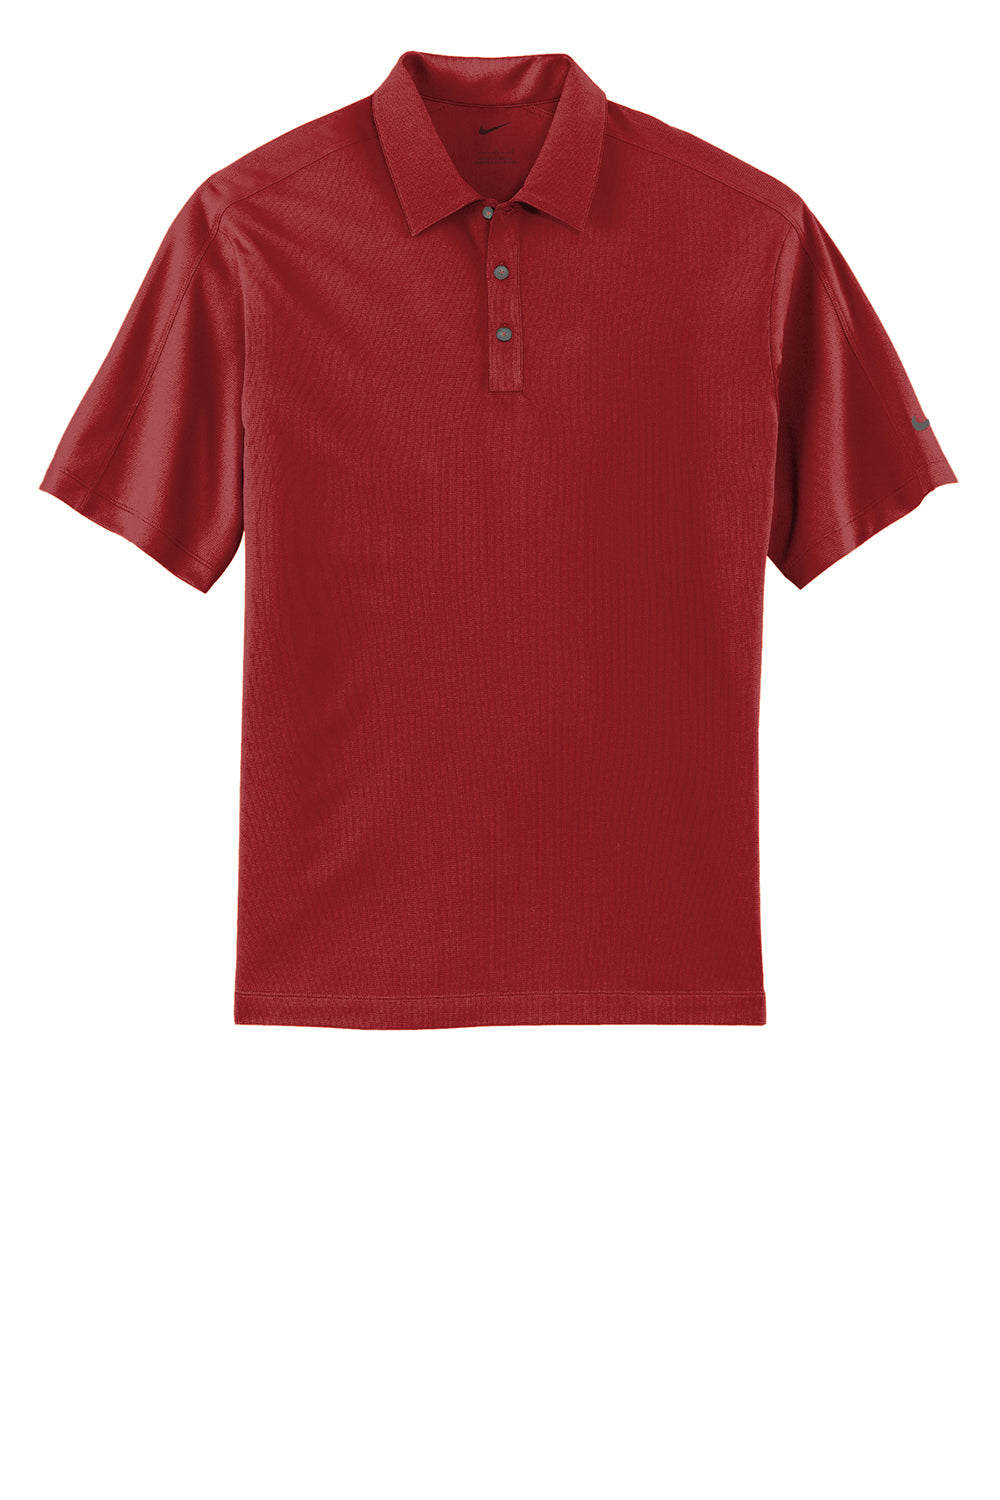 Nike 266998 Mens Tech Sport Dri-Fit Moisture Wicking Short Sleeve Polo Shirt Team Red Flat Front